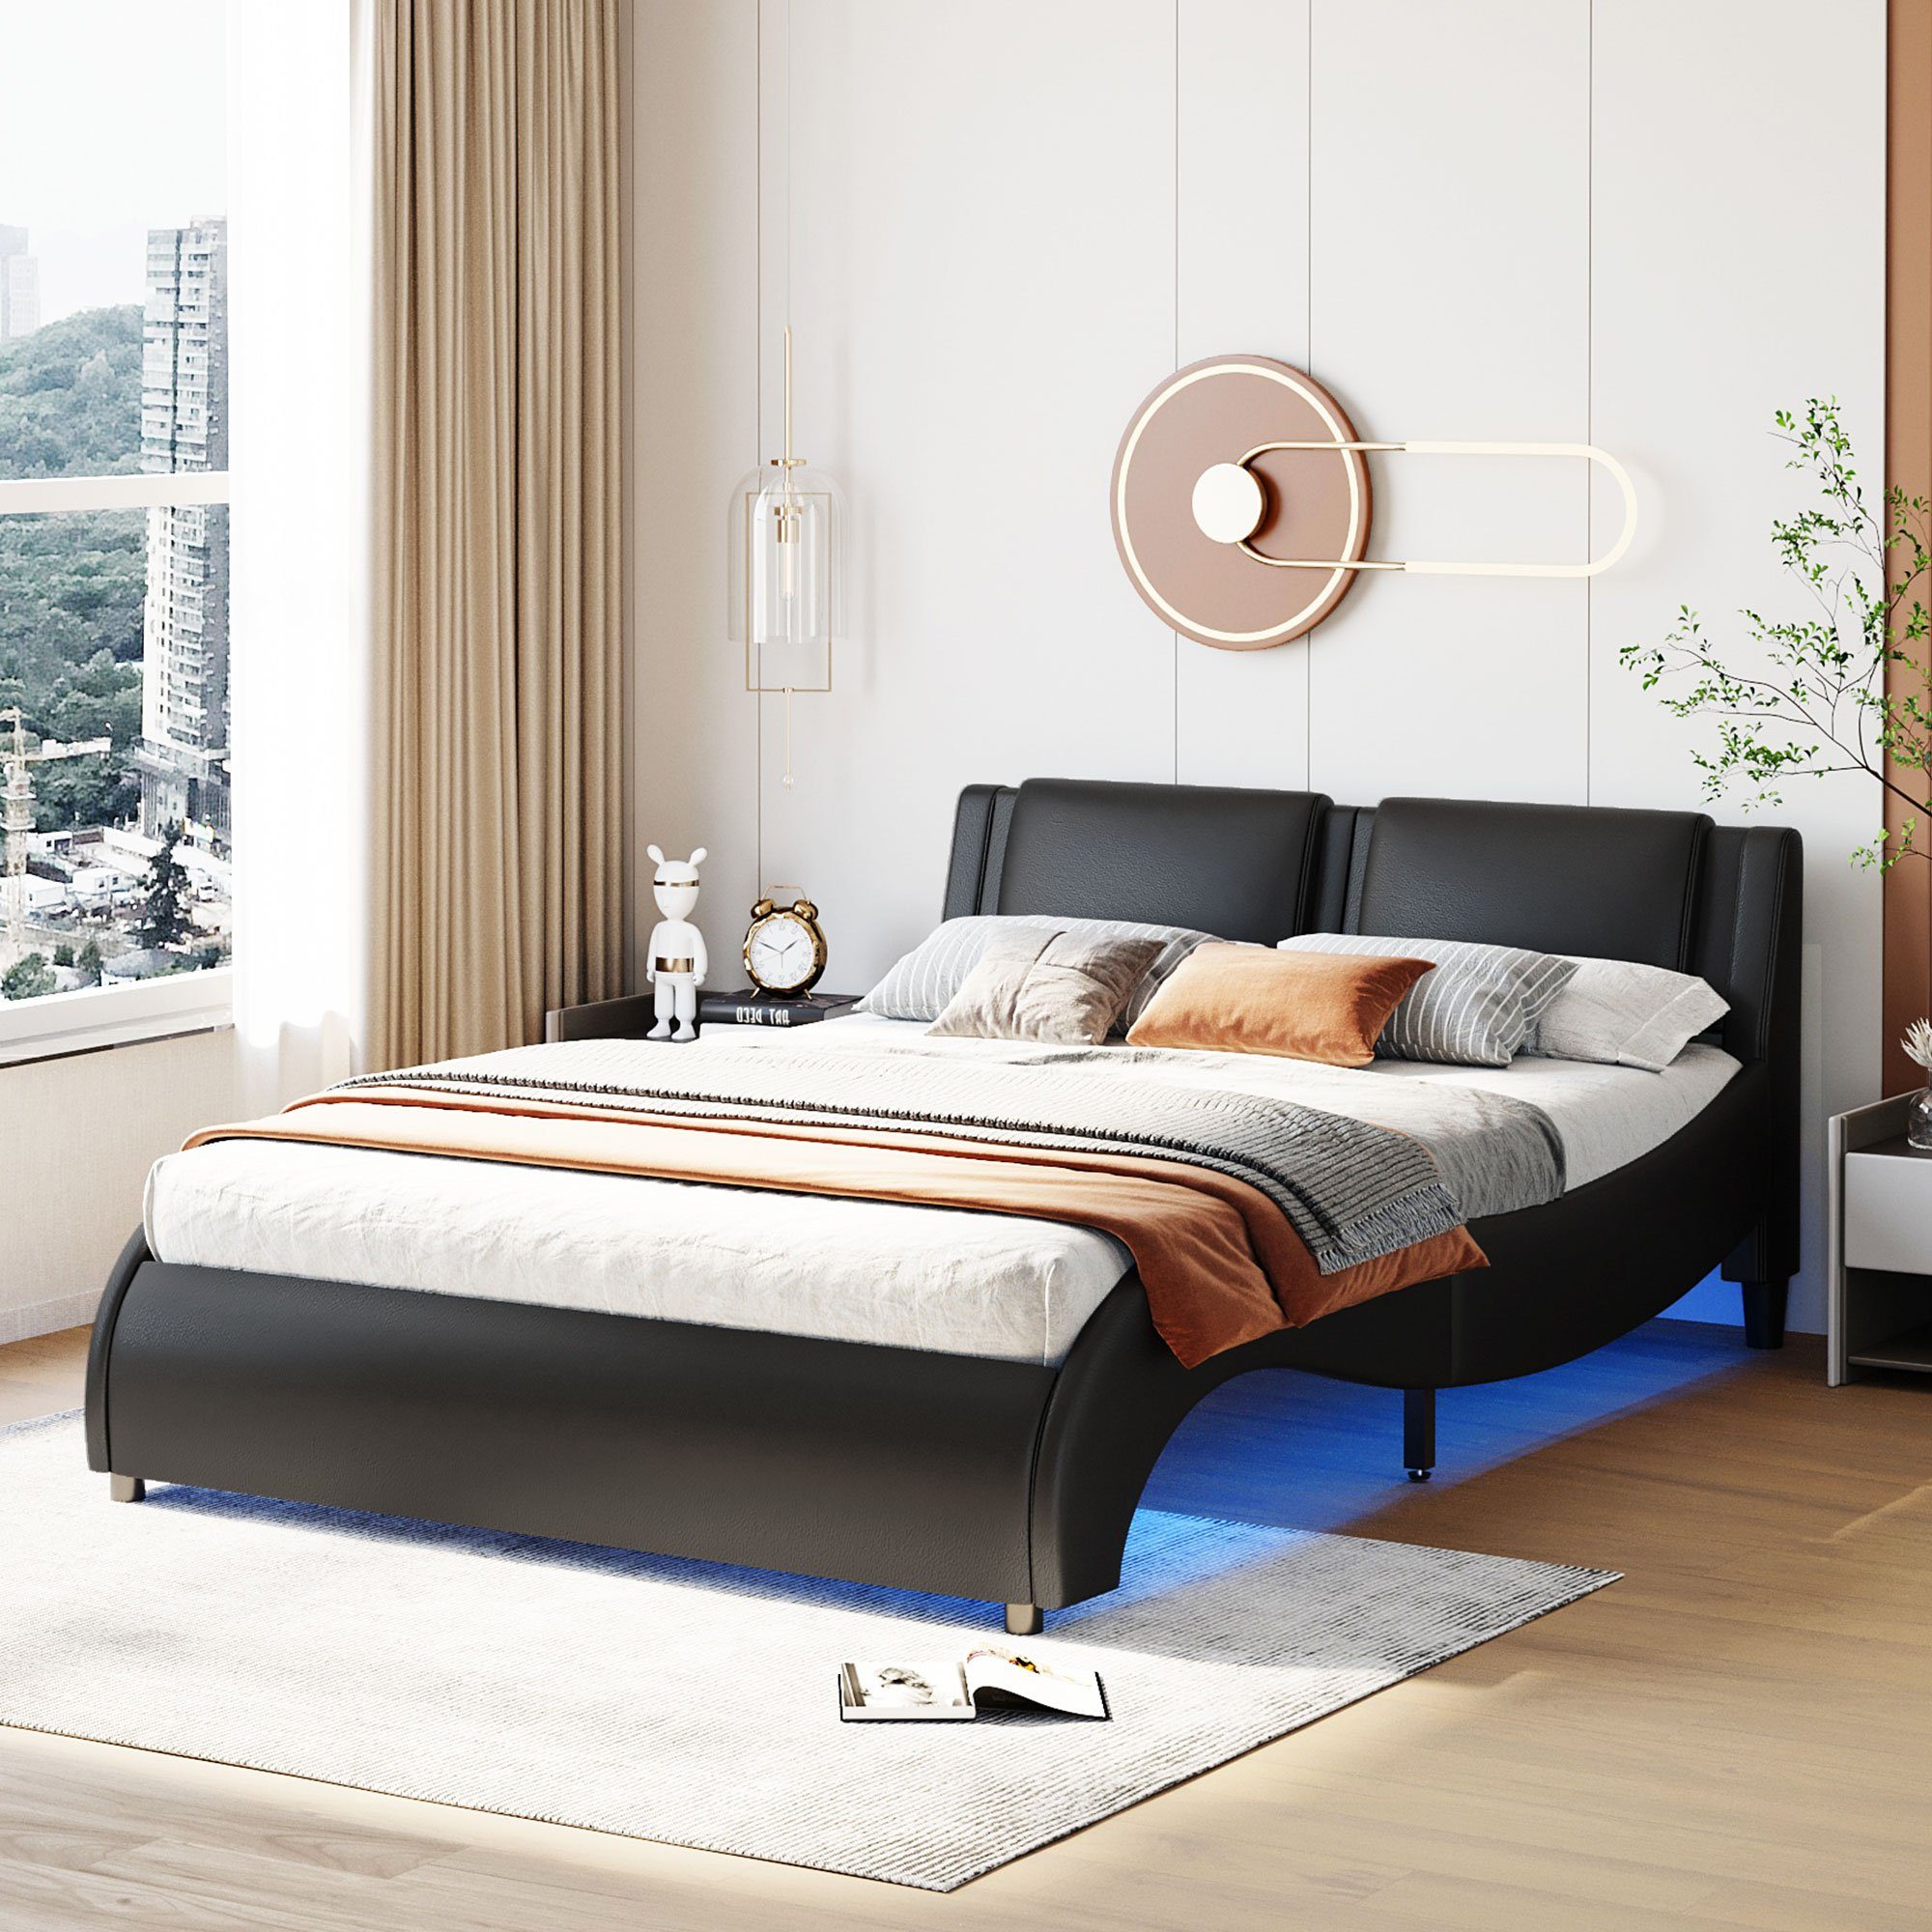 Kunstlederbett Schwarz OKWISH mit LED-Lichtbettgestell (140*200cm Bett ohne Gästebett Lattenrosten), Polsterbett Funktionsbett mit Doppelbett Matratze